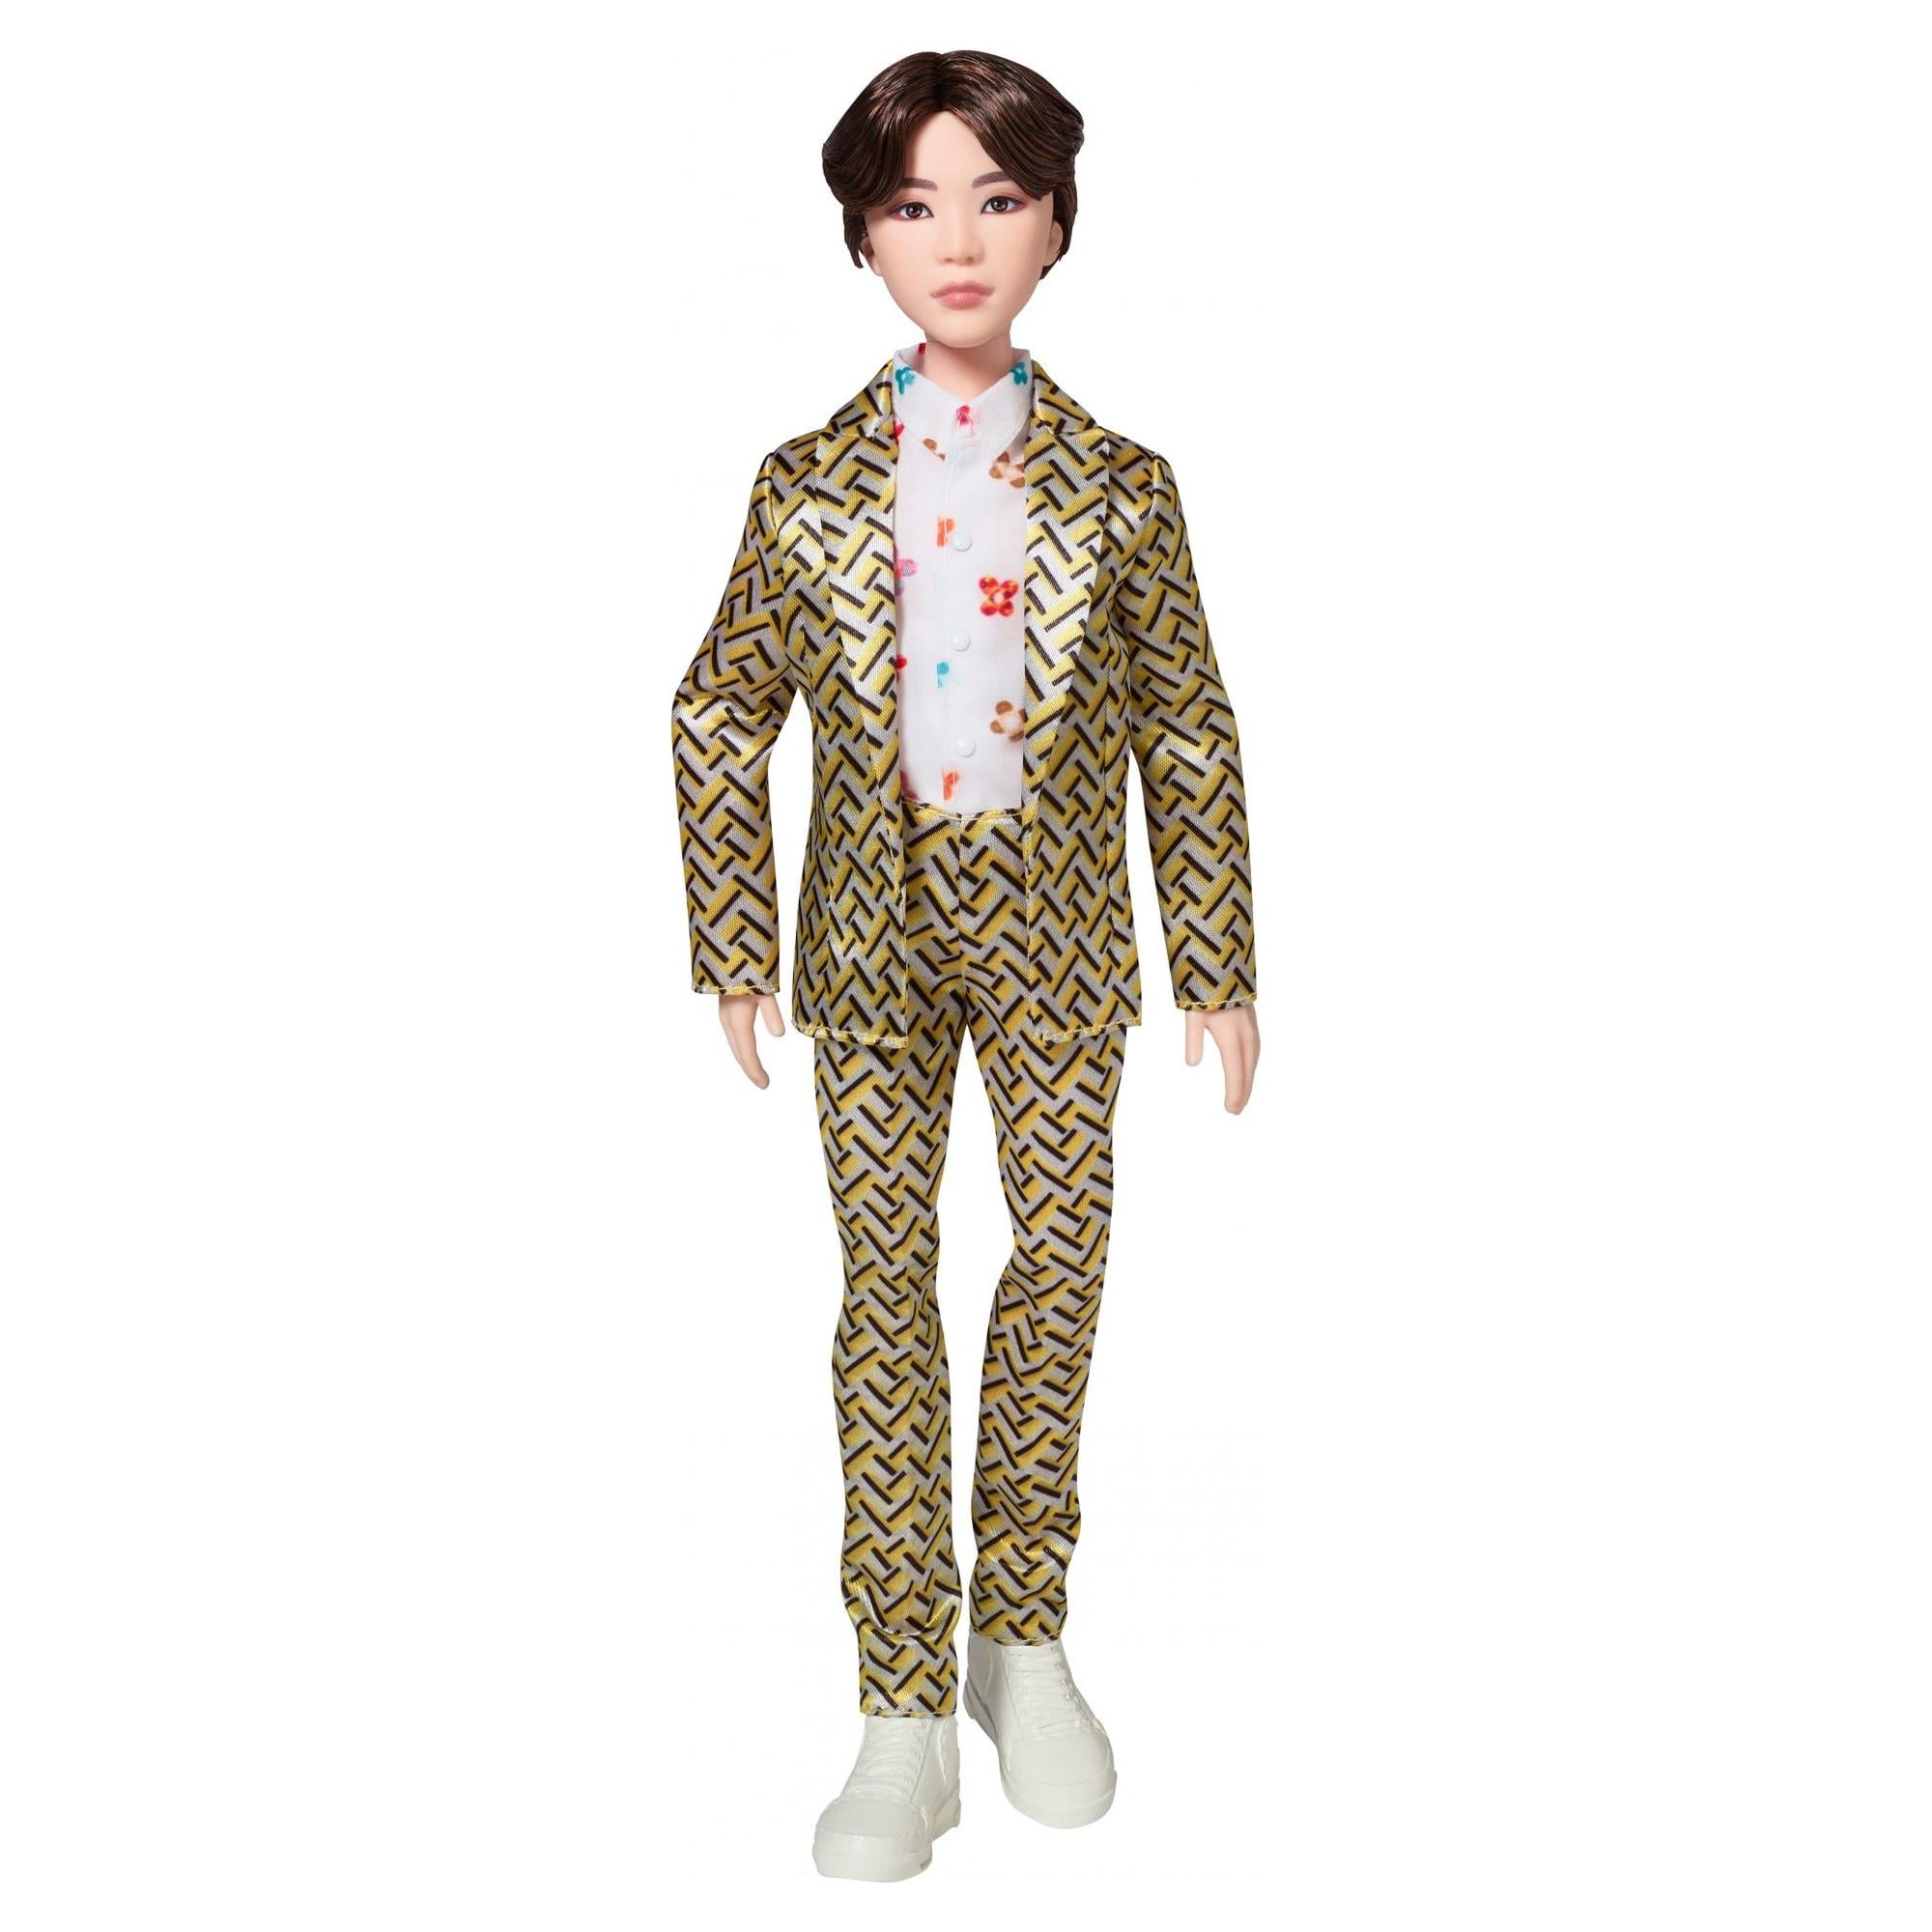 BTS SUGA Idol Doll - image 1 of 8